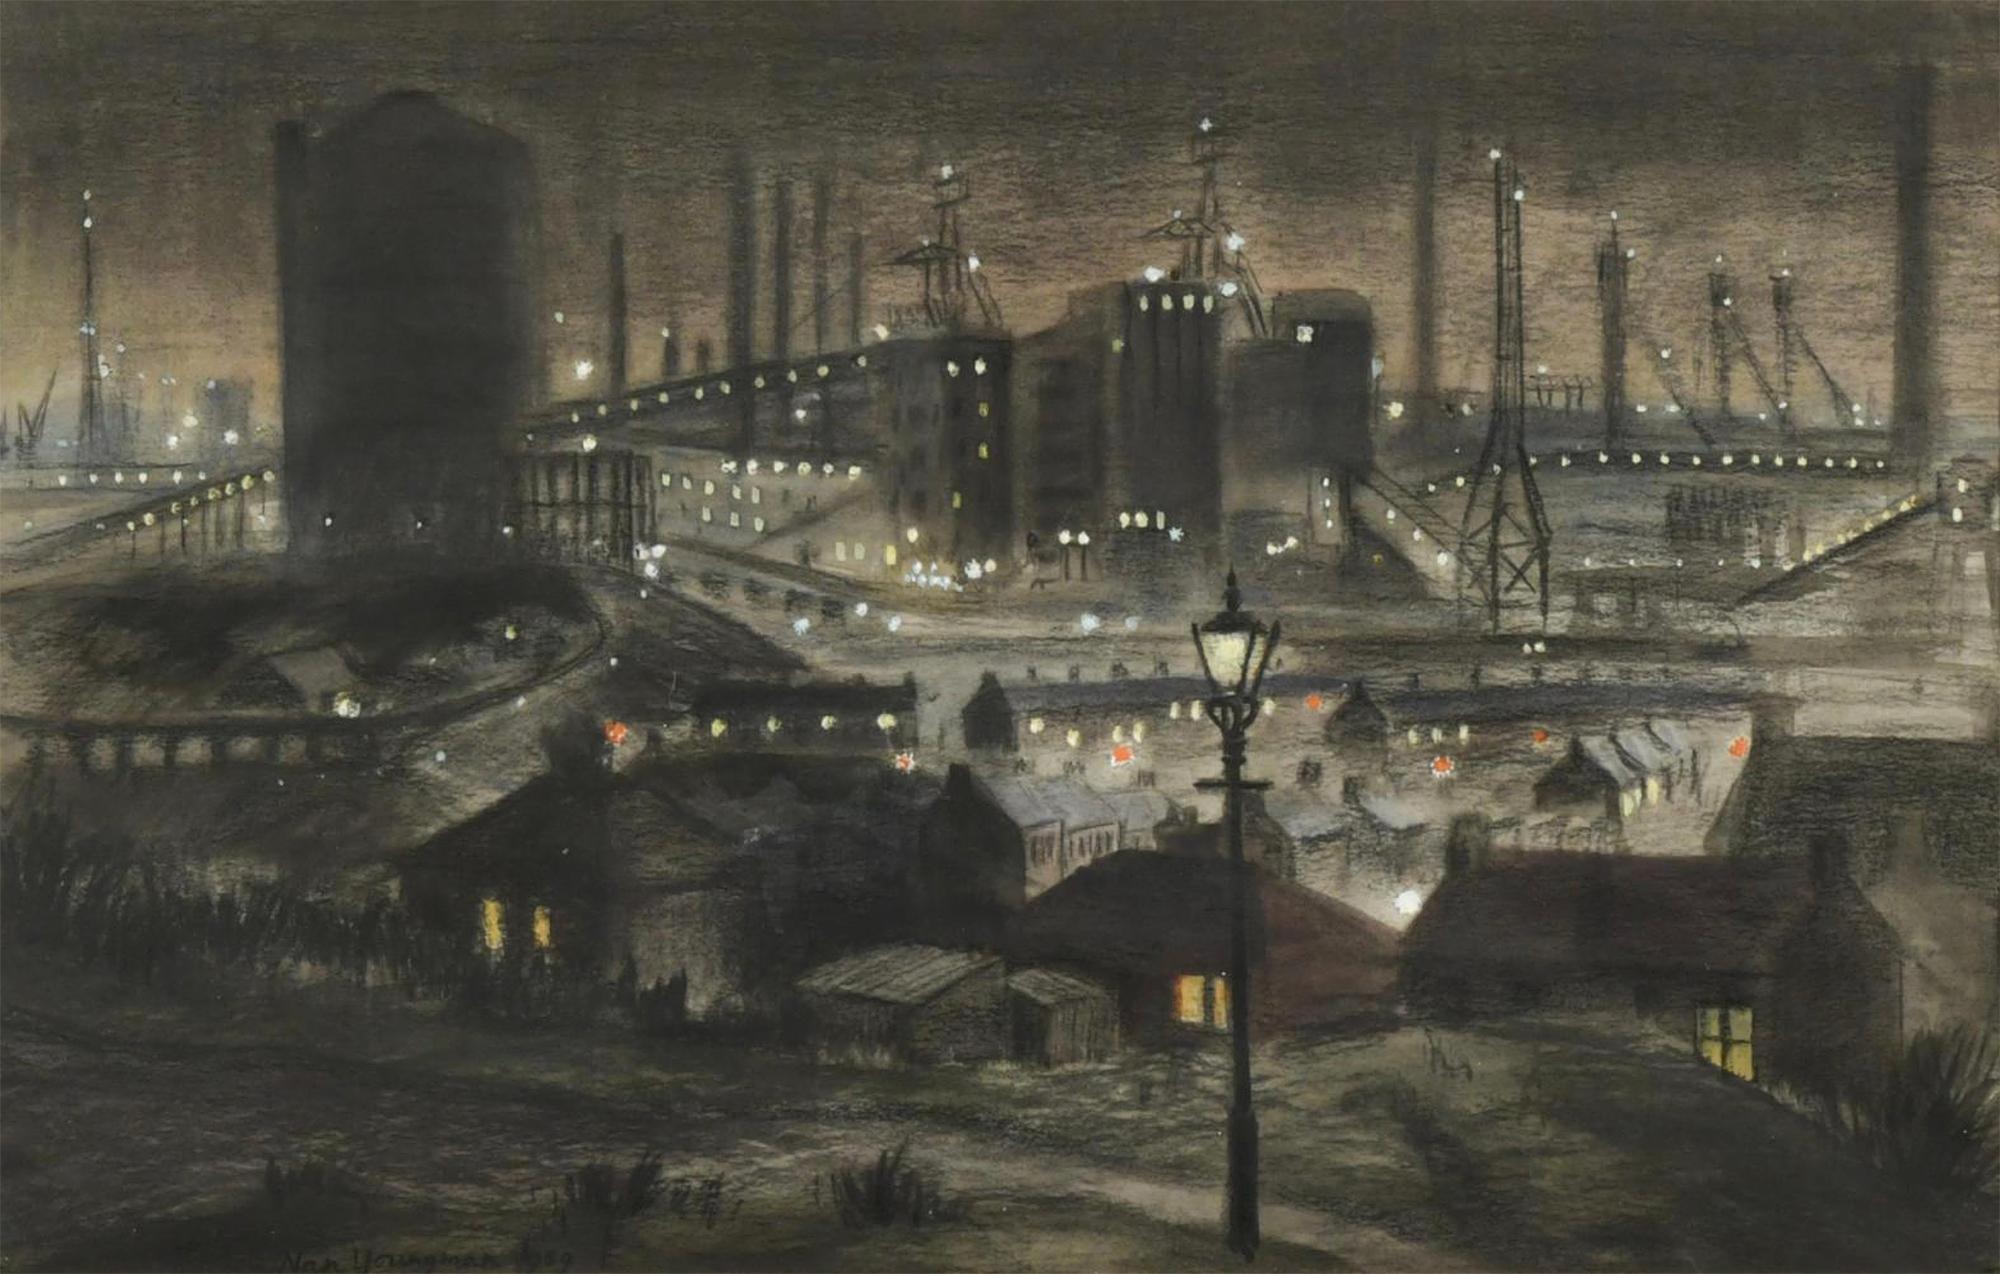 Industrial Steel Plant at Night Port Talbot - Mid-Century  - like L. S. Lowry 8